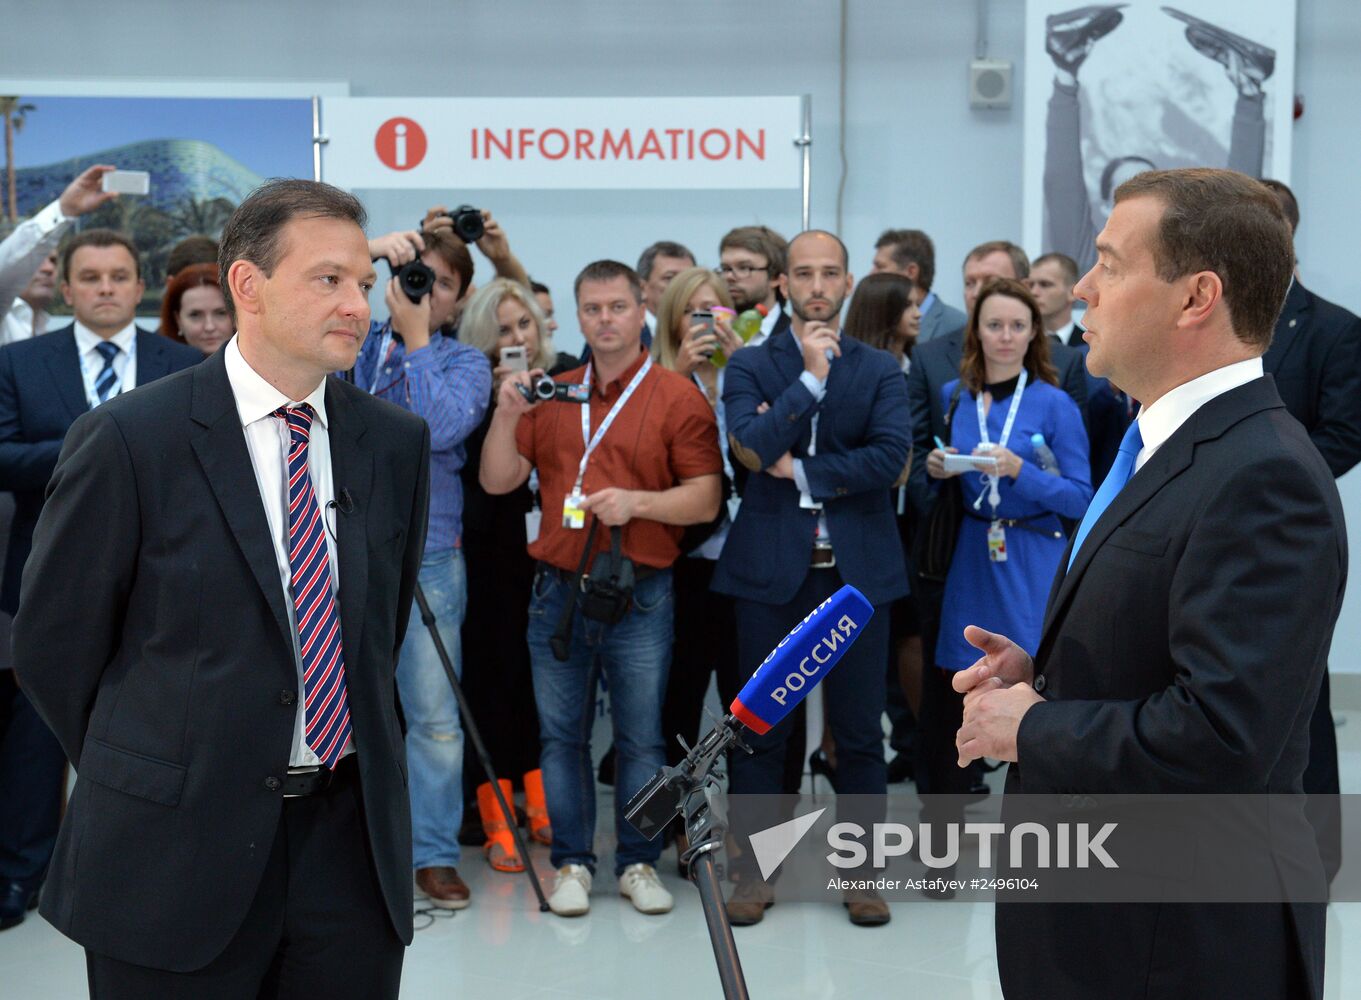 Dmitry Medvedev attends Sochi 2014 International Investment Forum